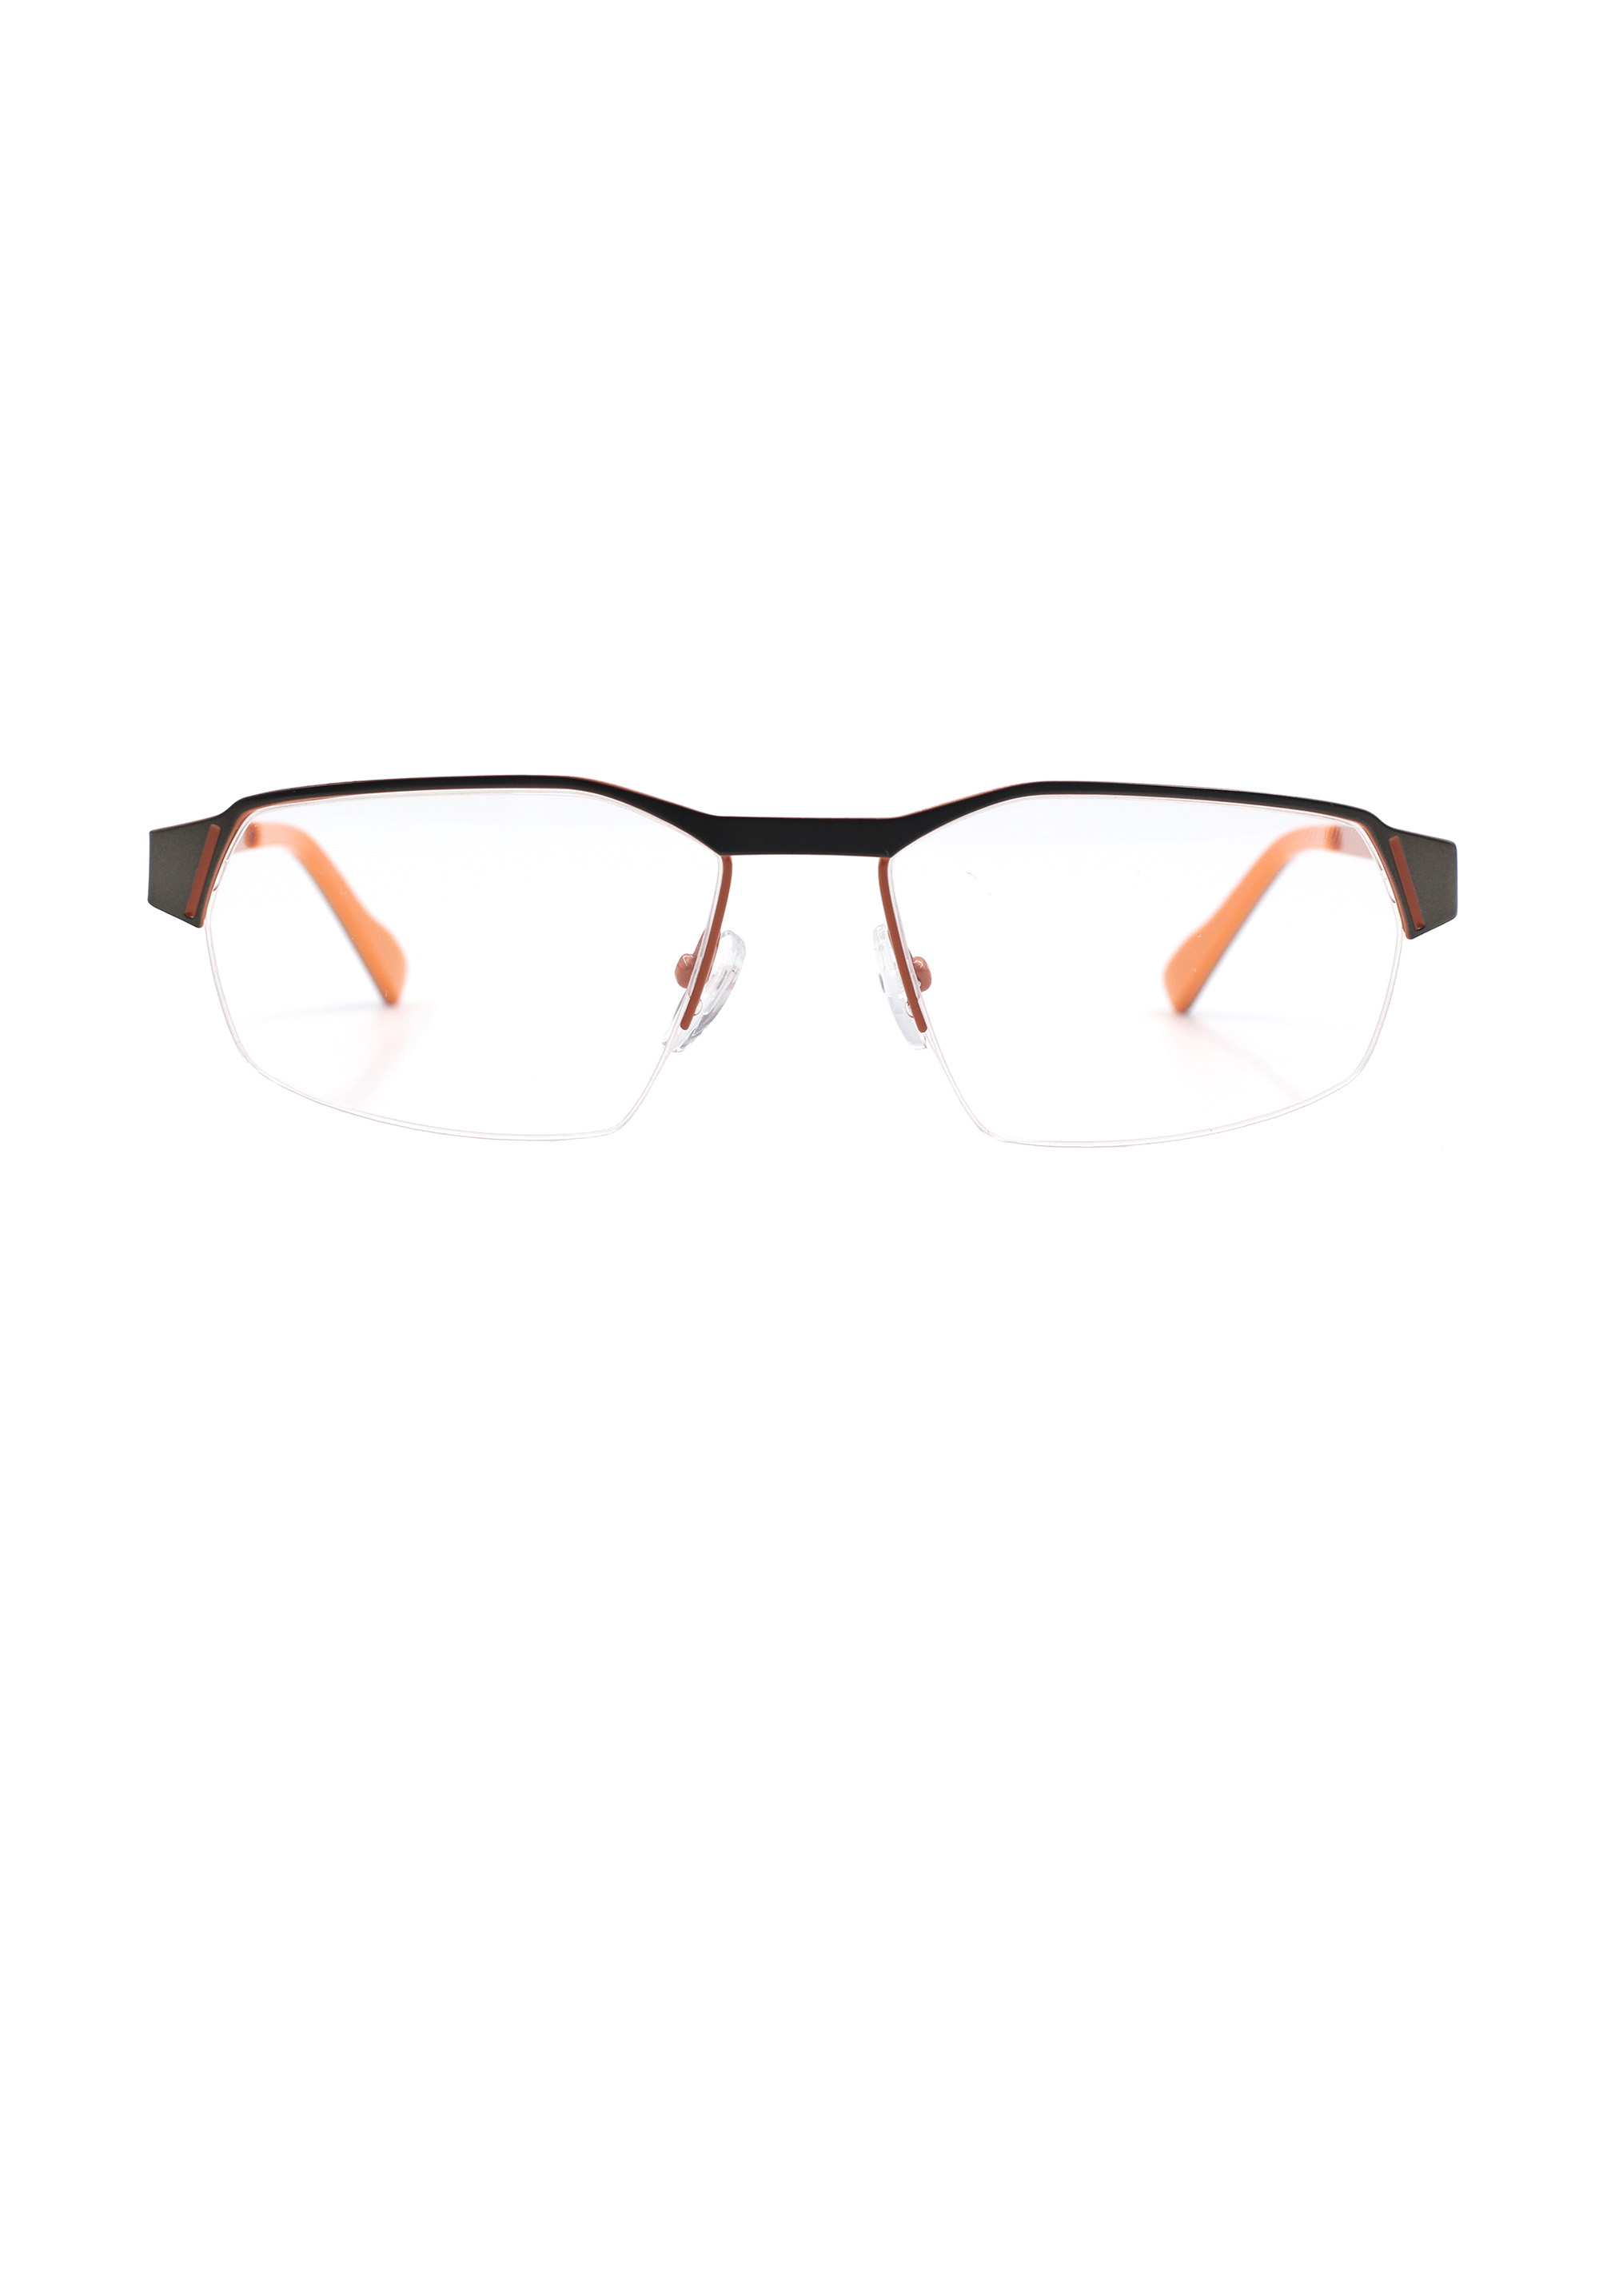 Male fashion optical metal glasses Featured Image